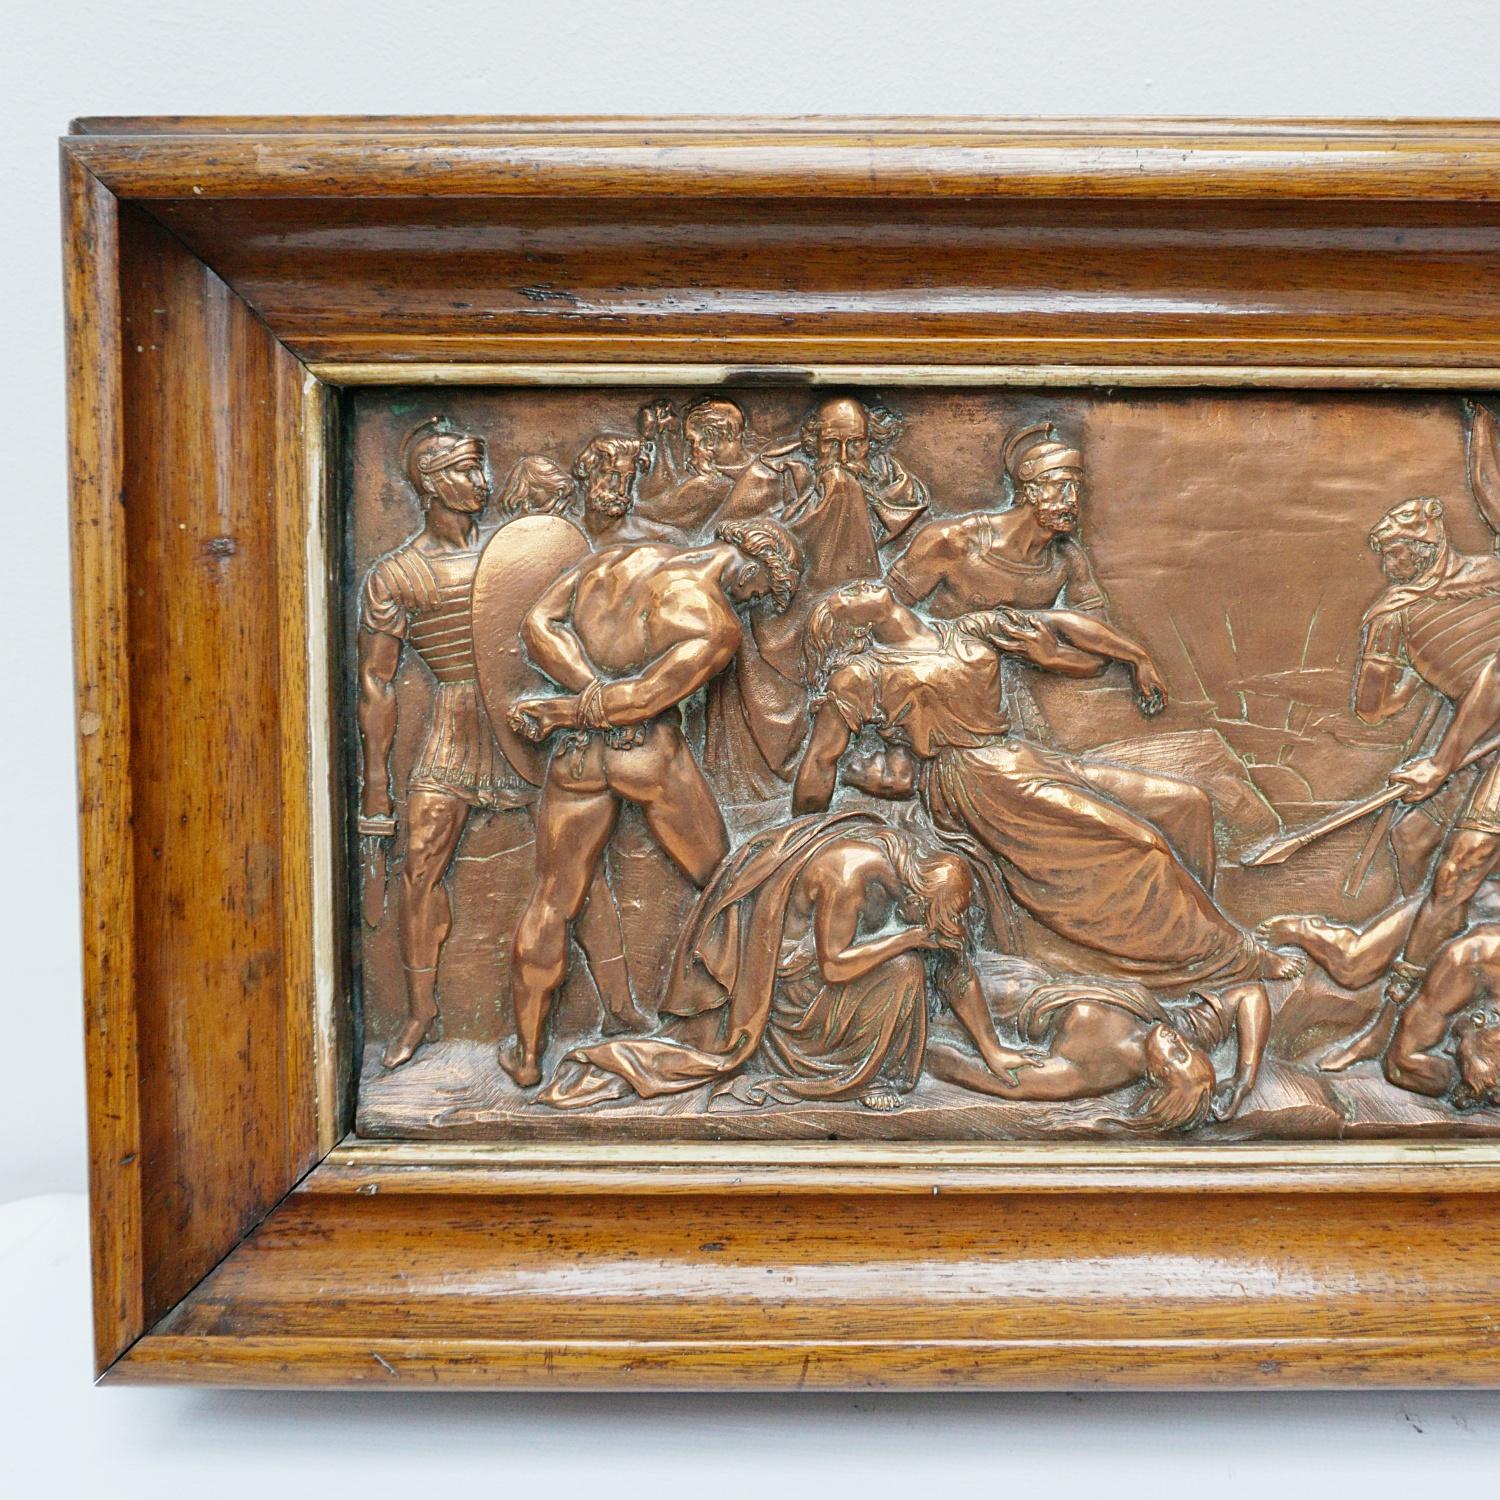 A late 19th century copper relief depicting a Roman battleground. Excellent detail and original condition. 

Dimensions: H 37cm W 80cm D 6cm

Origin: English

Date: Circa 1880

Item Number: 2605224.